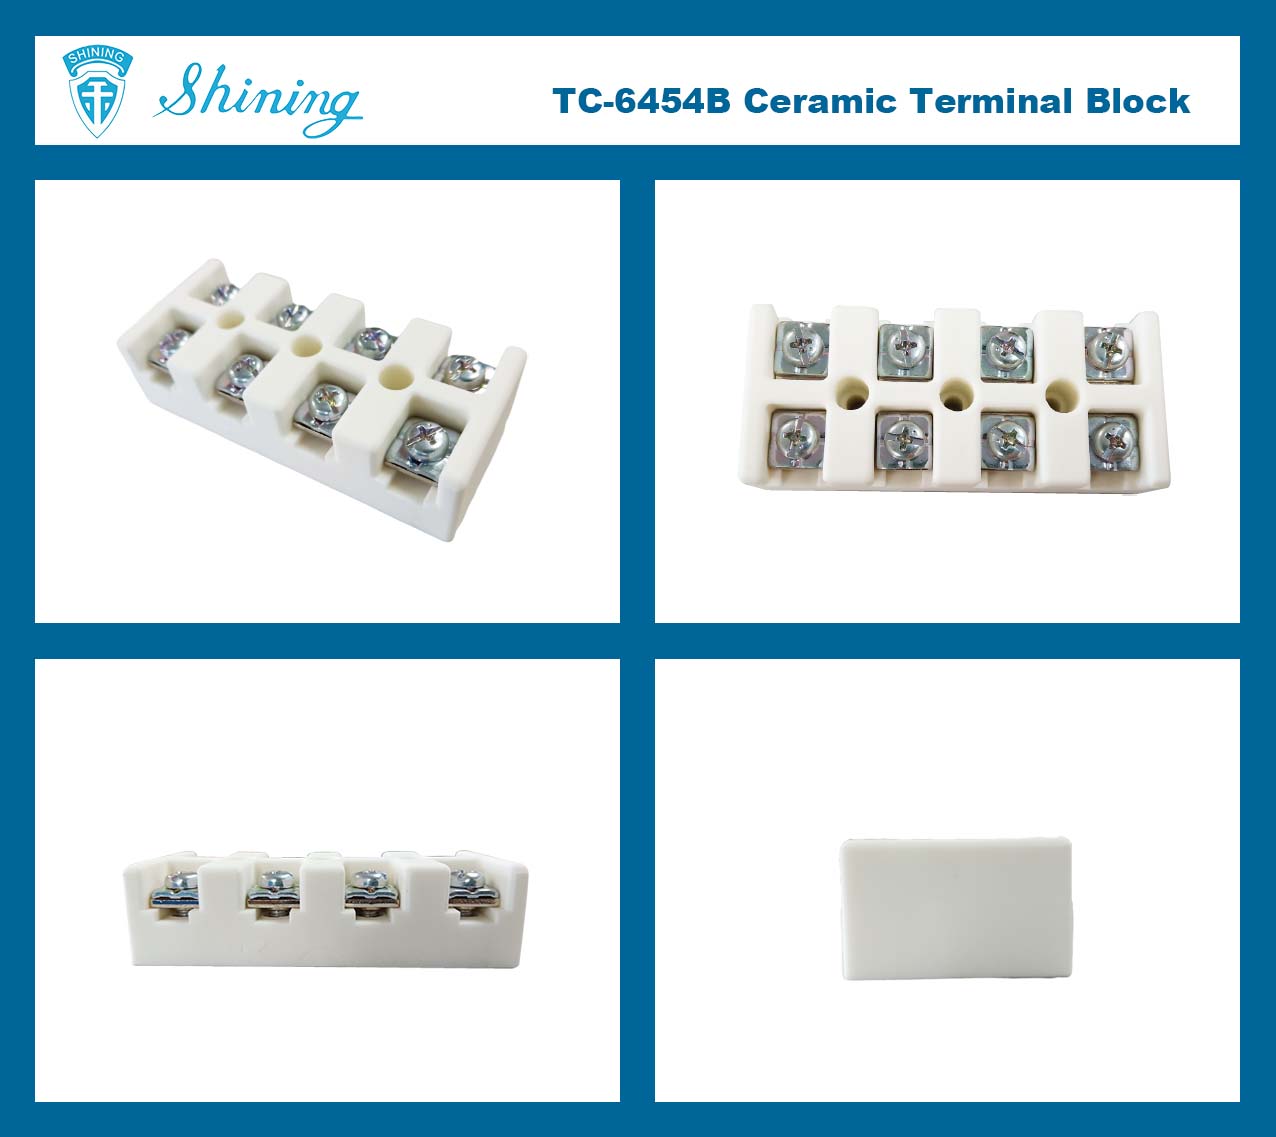 @$600V_30A_Terminal_Block$@Tc-6152C_&lt;2-2.4's product combination picture&gt;